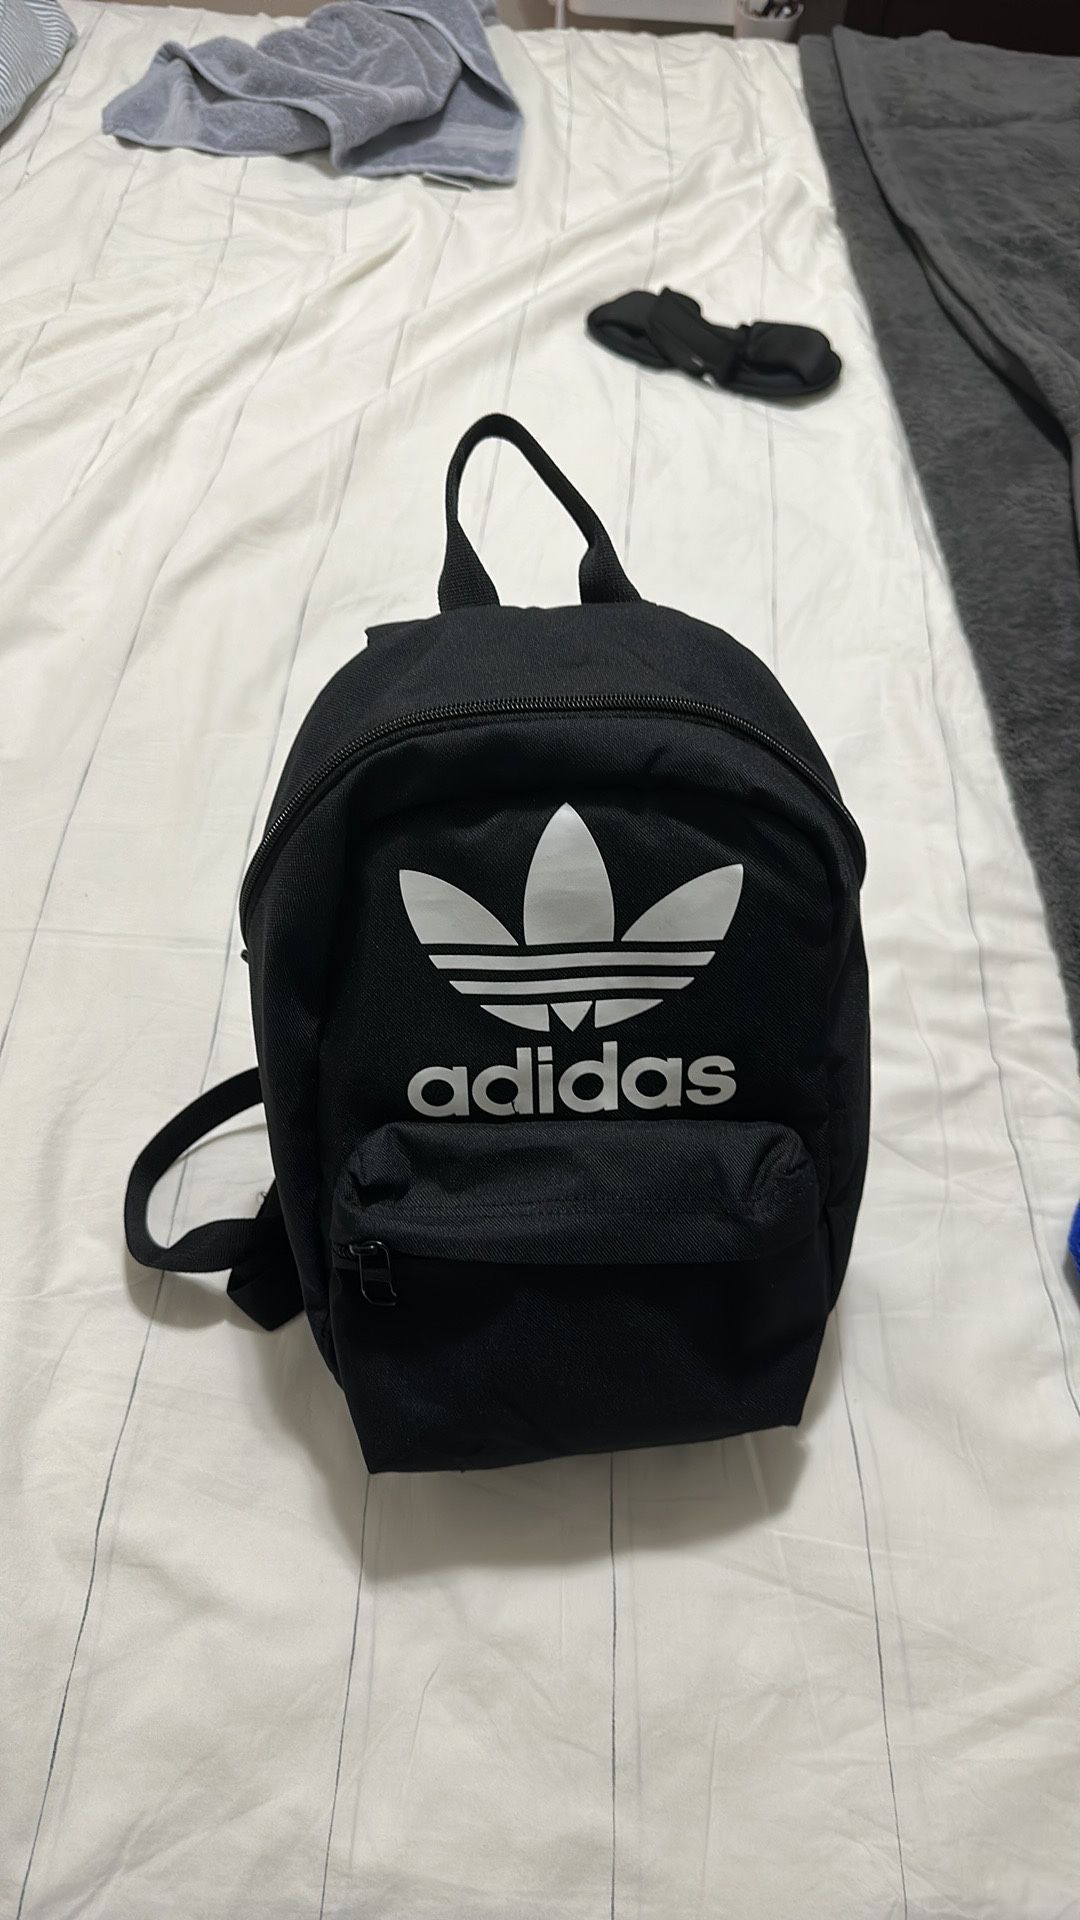 Adidas Mini Back Pack